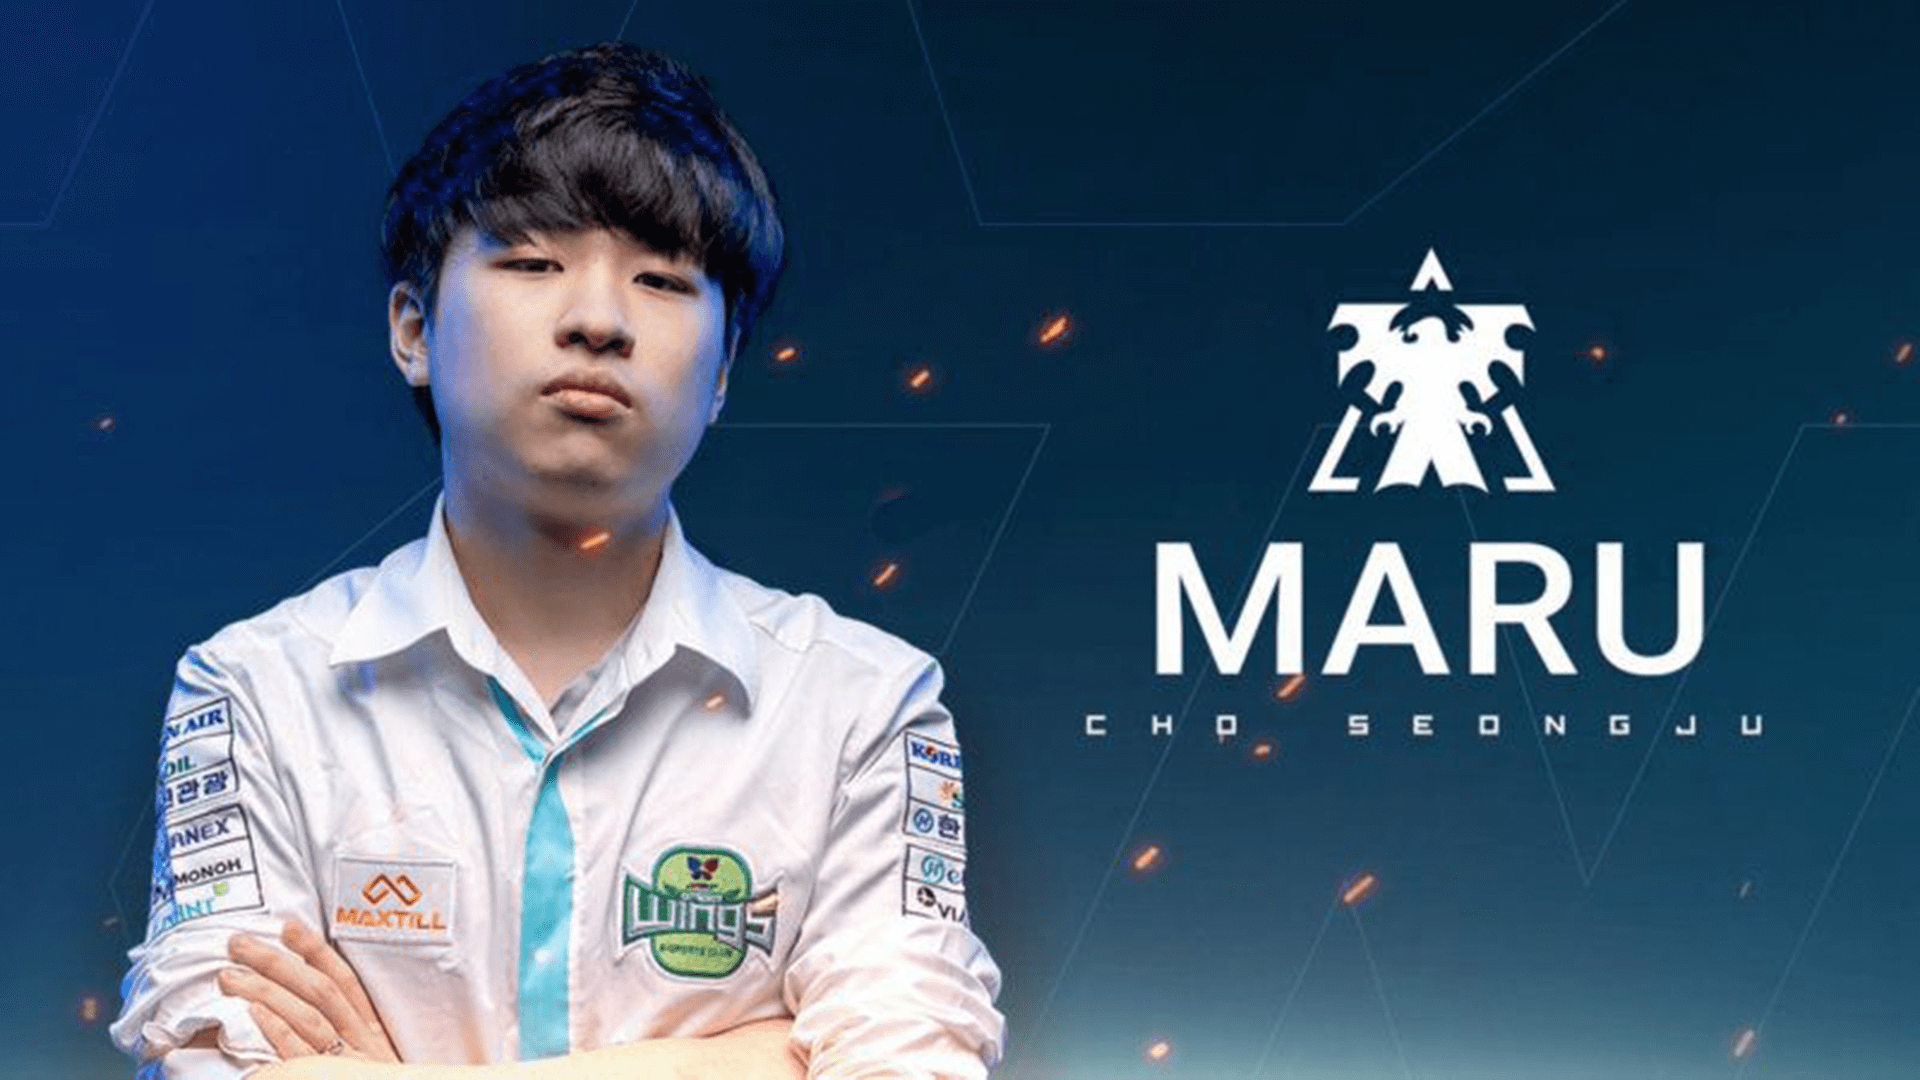 Top StarCraft II Players: Cho "Maru" Seong-ju